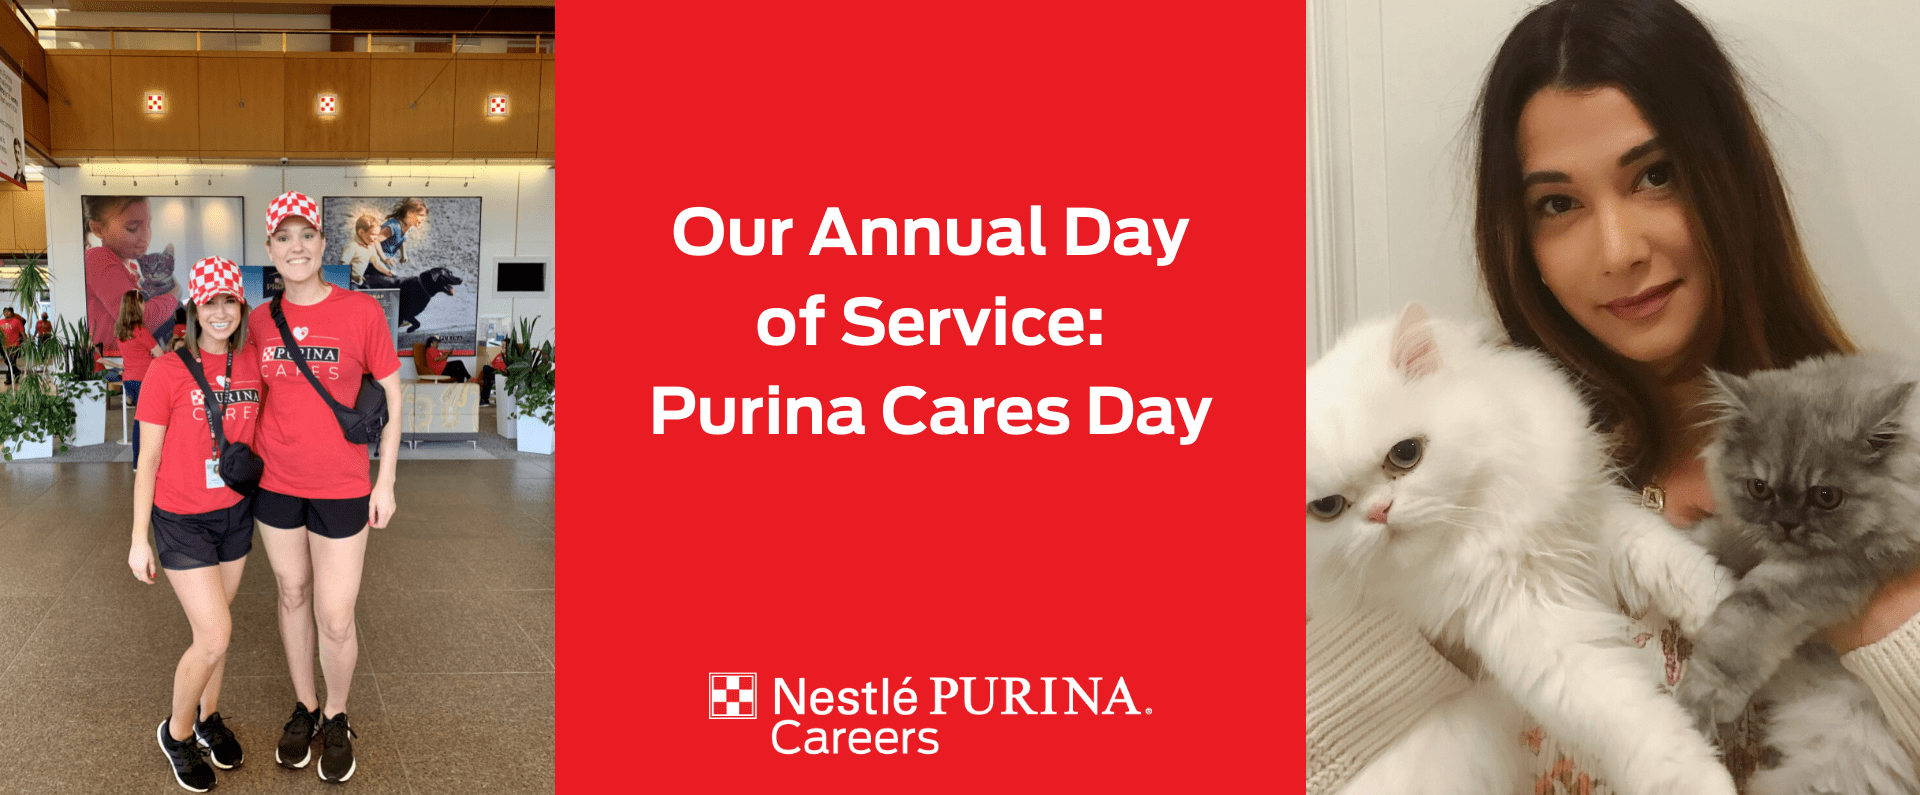 purina_cares_day_header